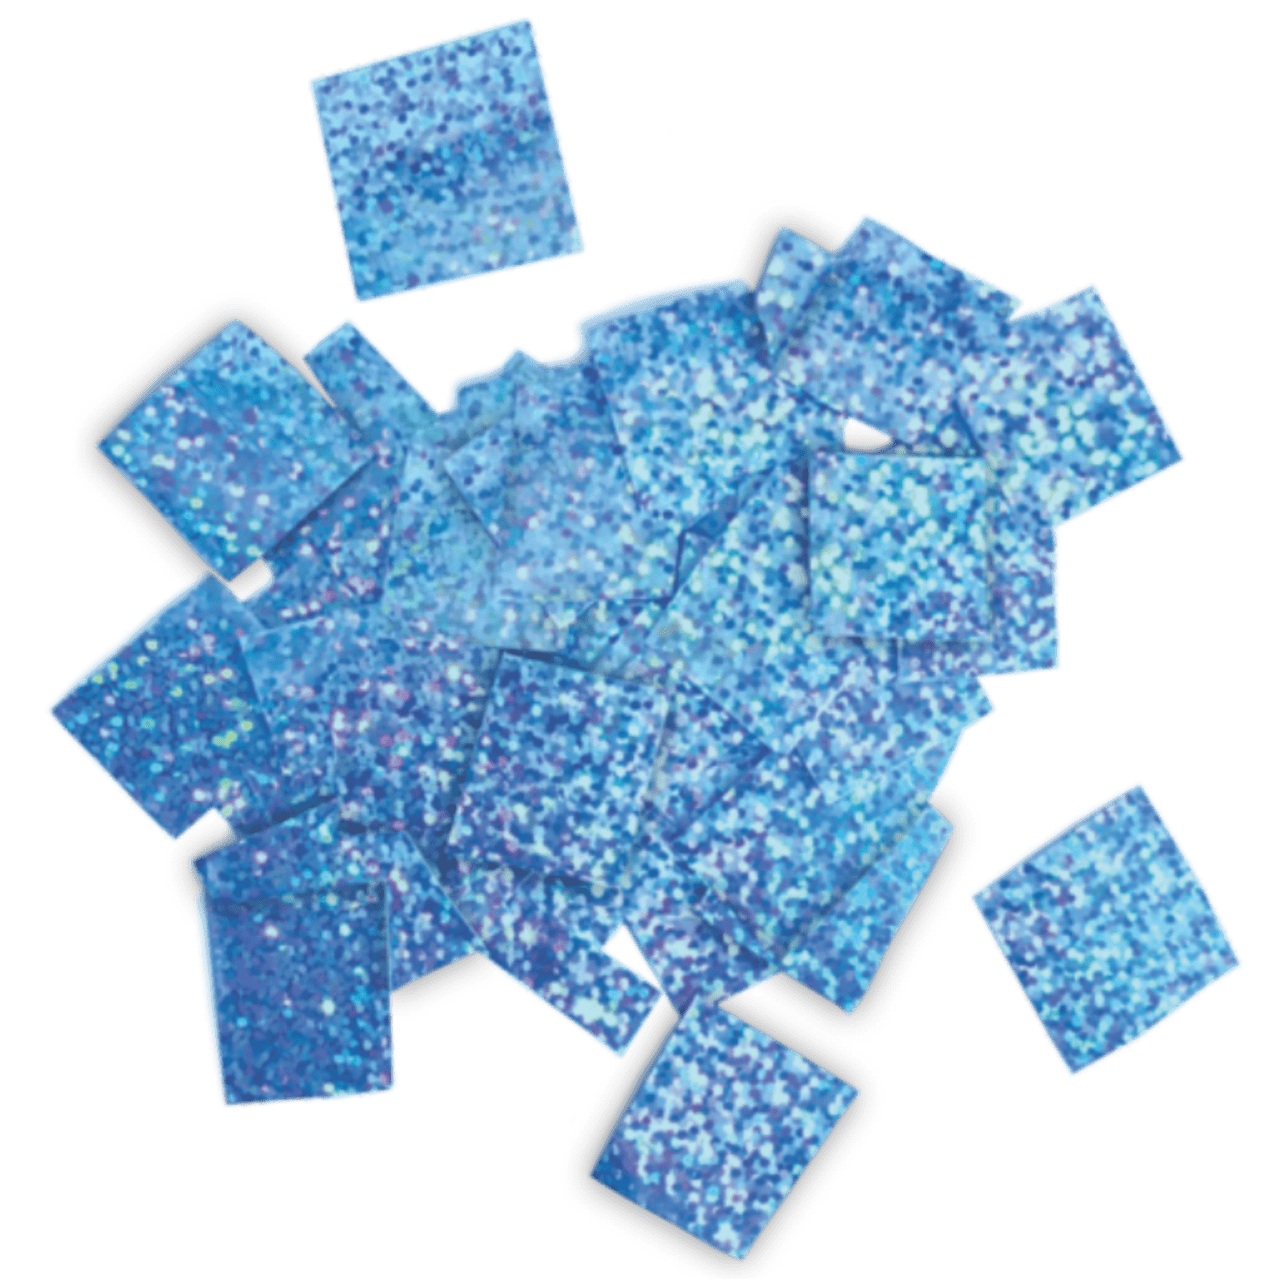 Comemoratio Confete Metalizado Azul